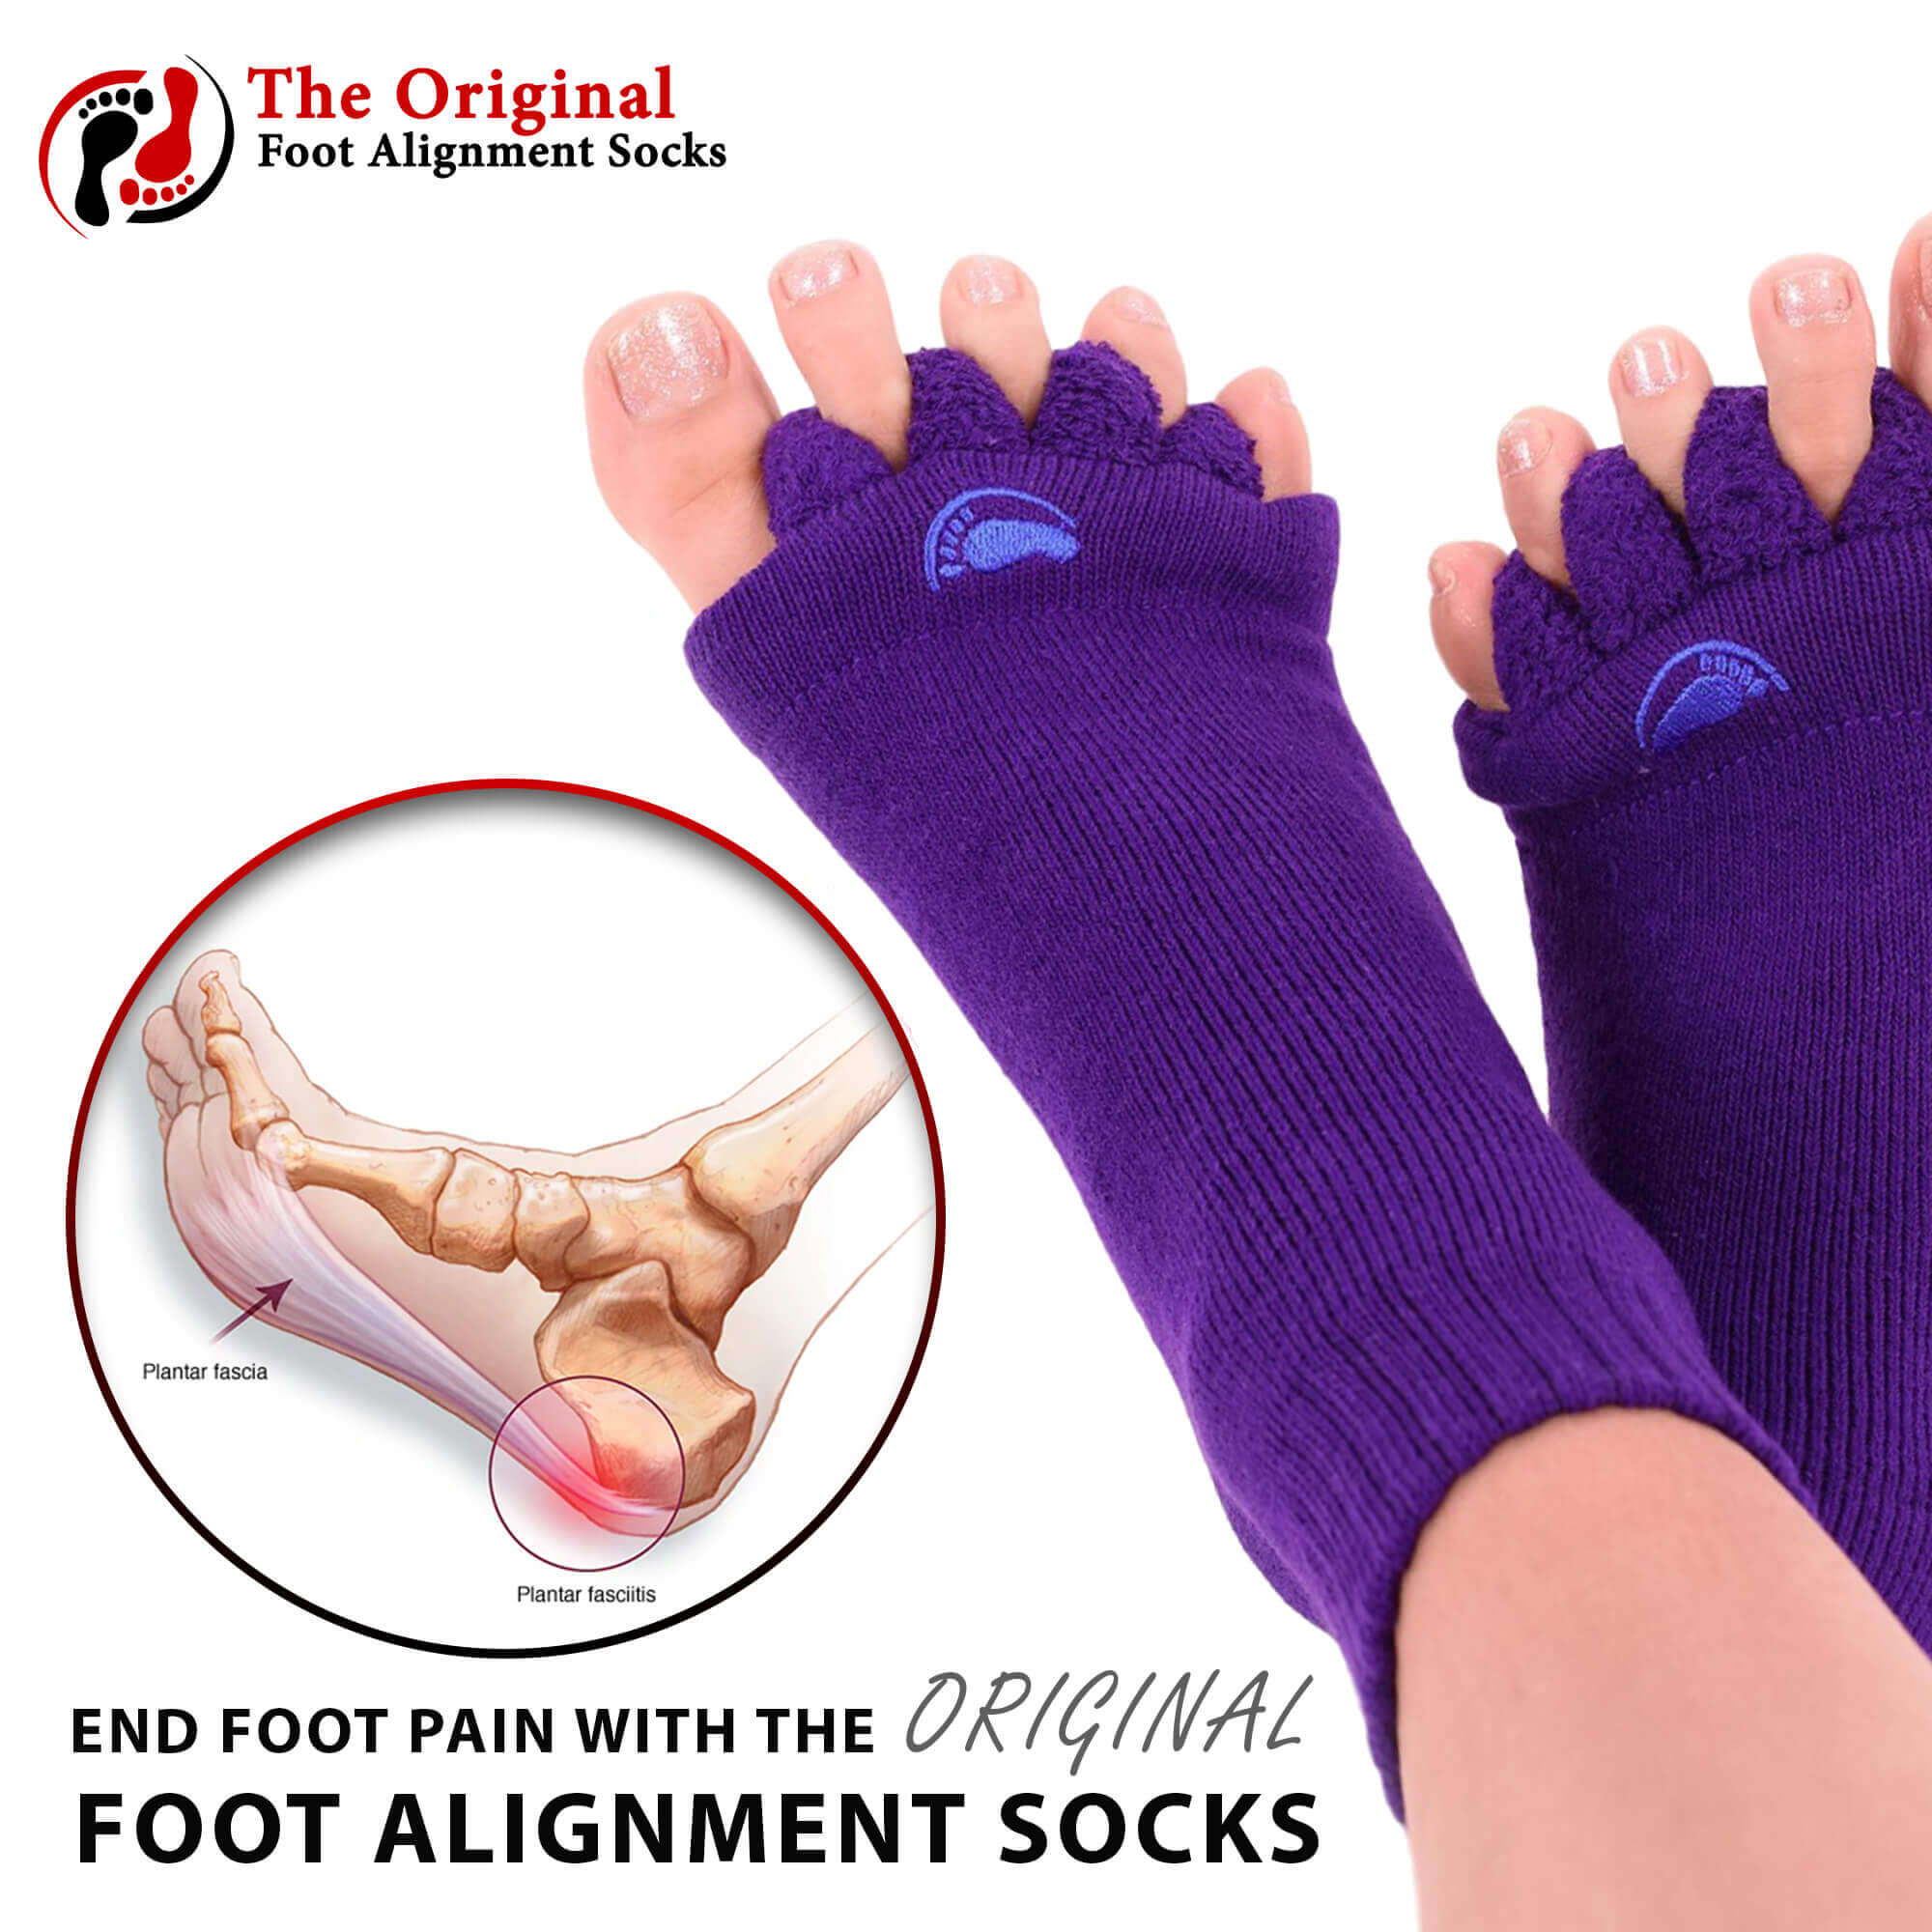 Foot alignment socks - The Original Foot Alignment Socks